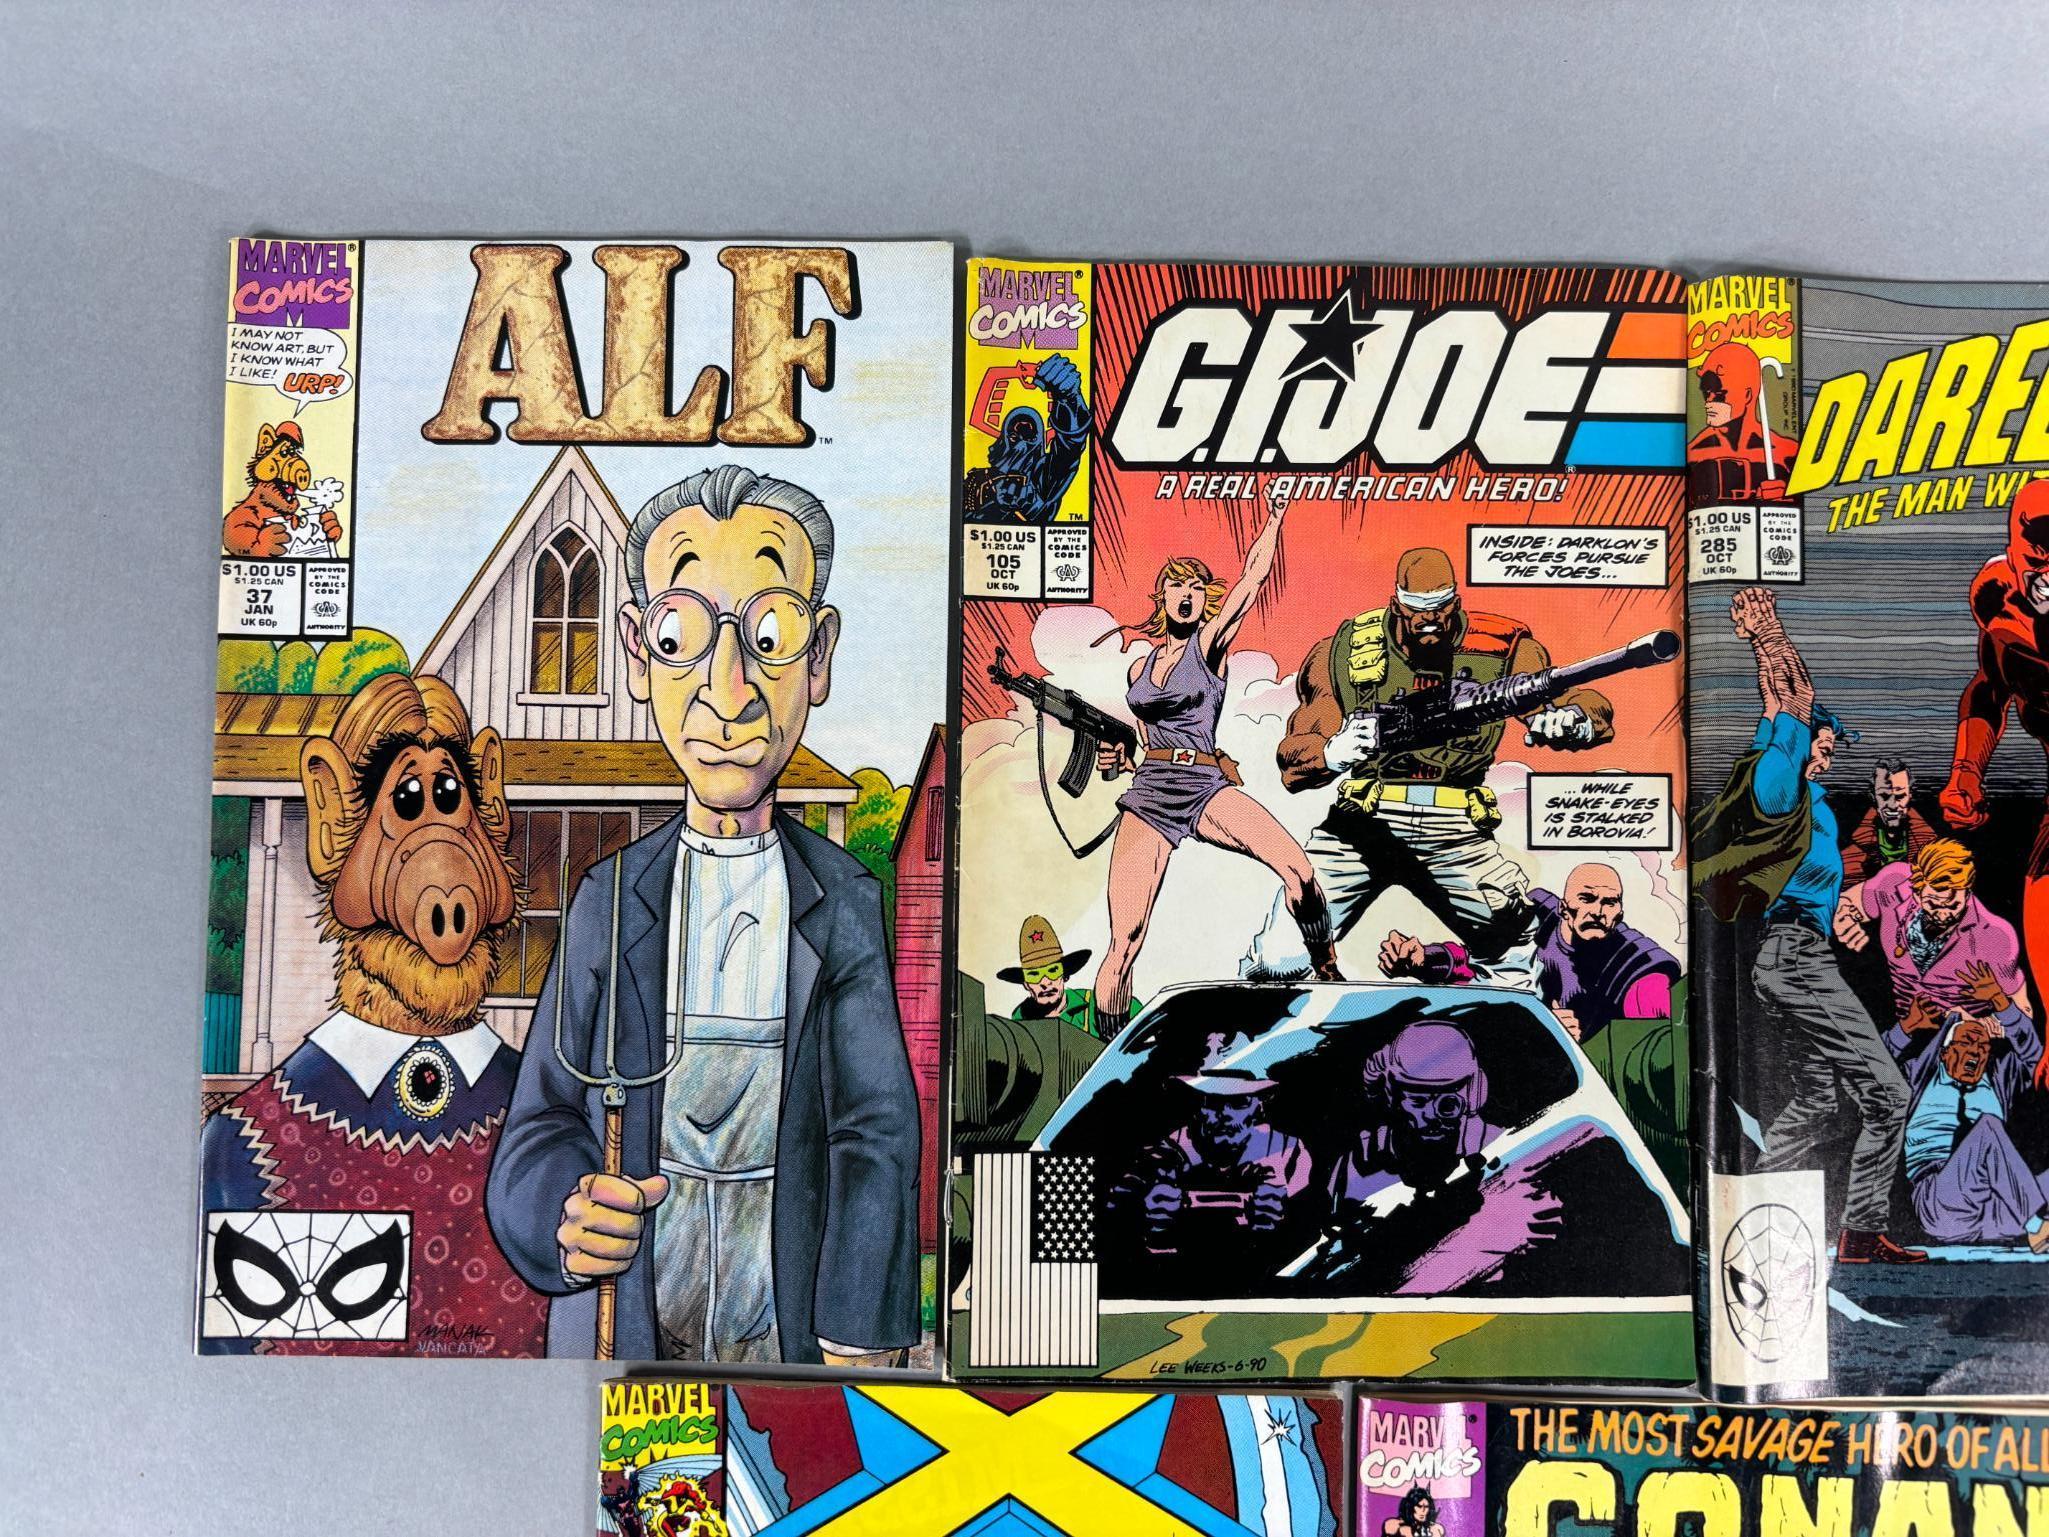 Group Lot Vintage $1.00 Comic Books Superhero and More